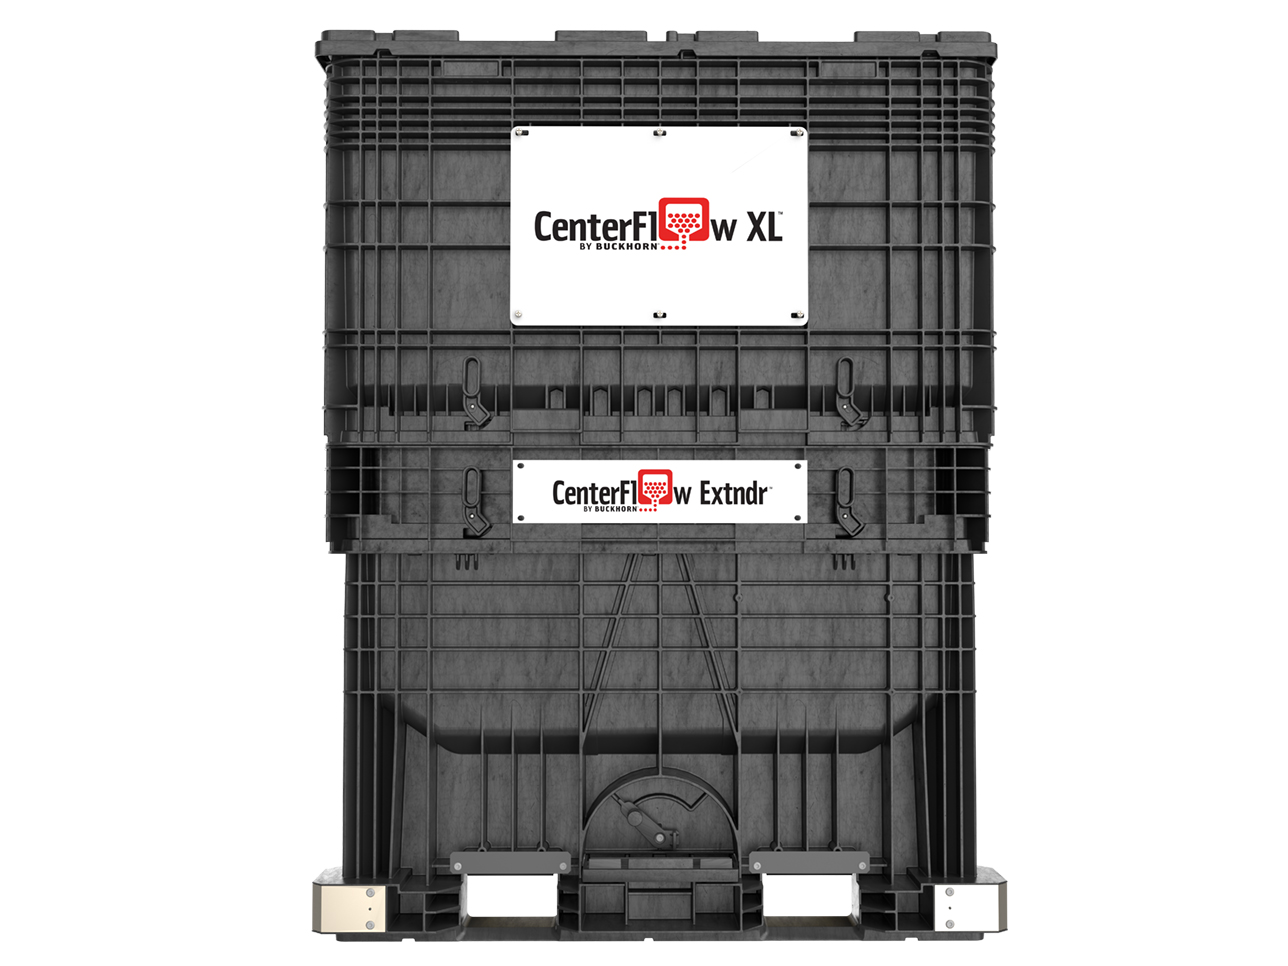 Buckhorn Hemp Seed Container | Hemp Box Storage Solution | Store CBD Hemp Flower